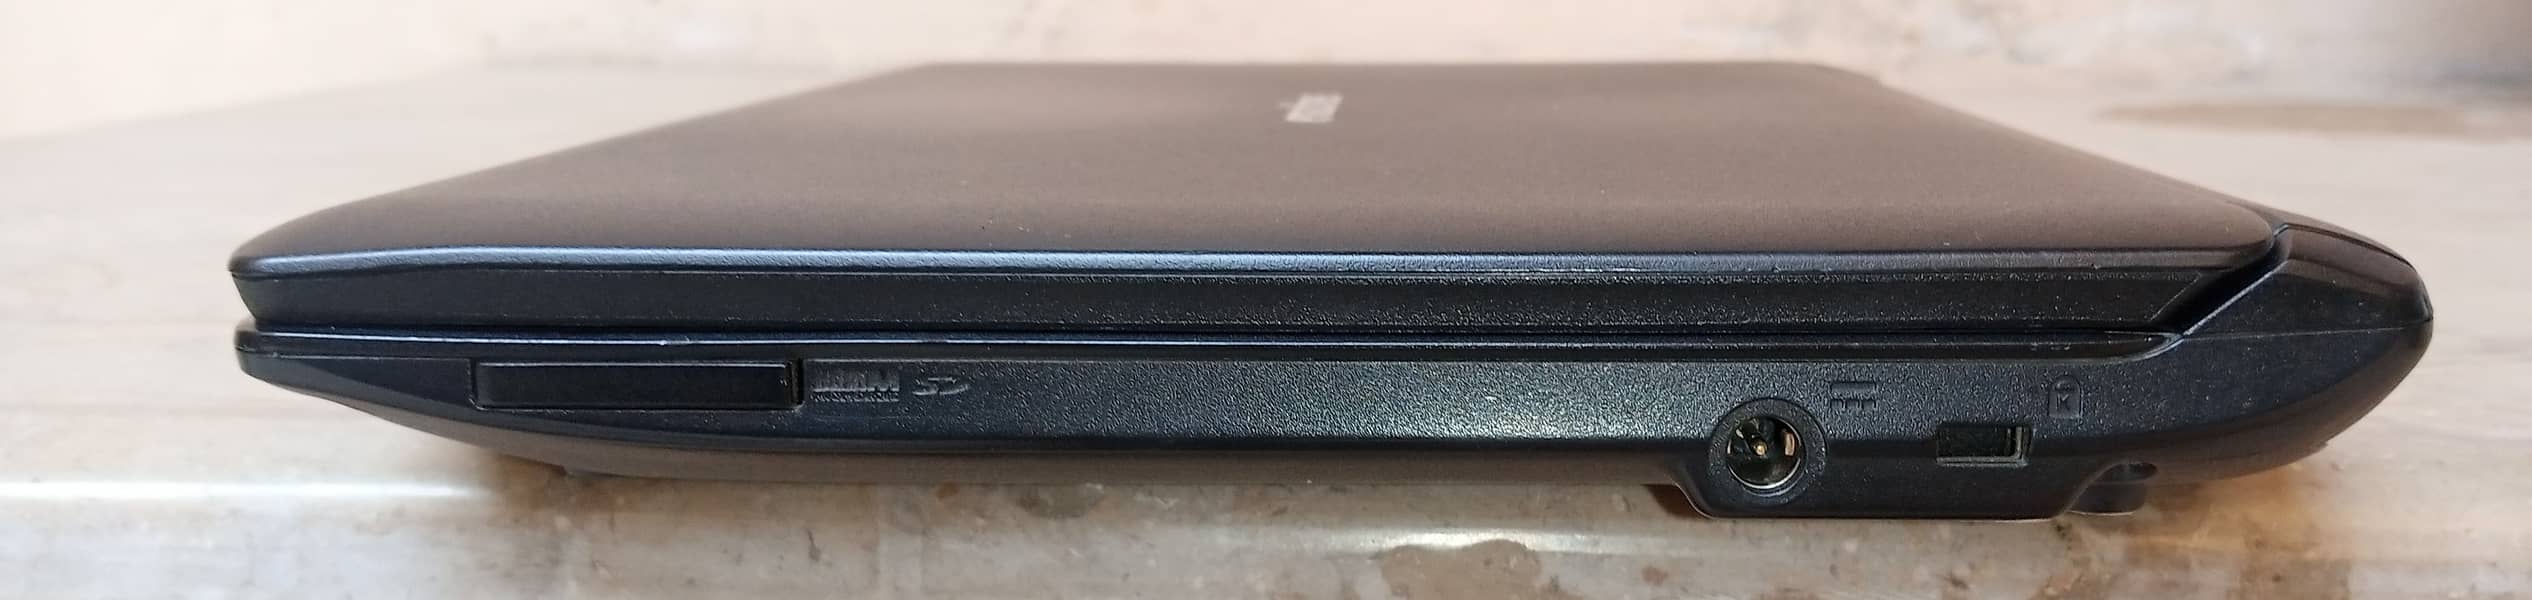 Acer Emachine em350 Laptop - Atom N450 - 1 GB Ram - 160 GB Rom 5